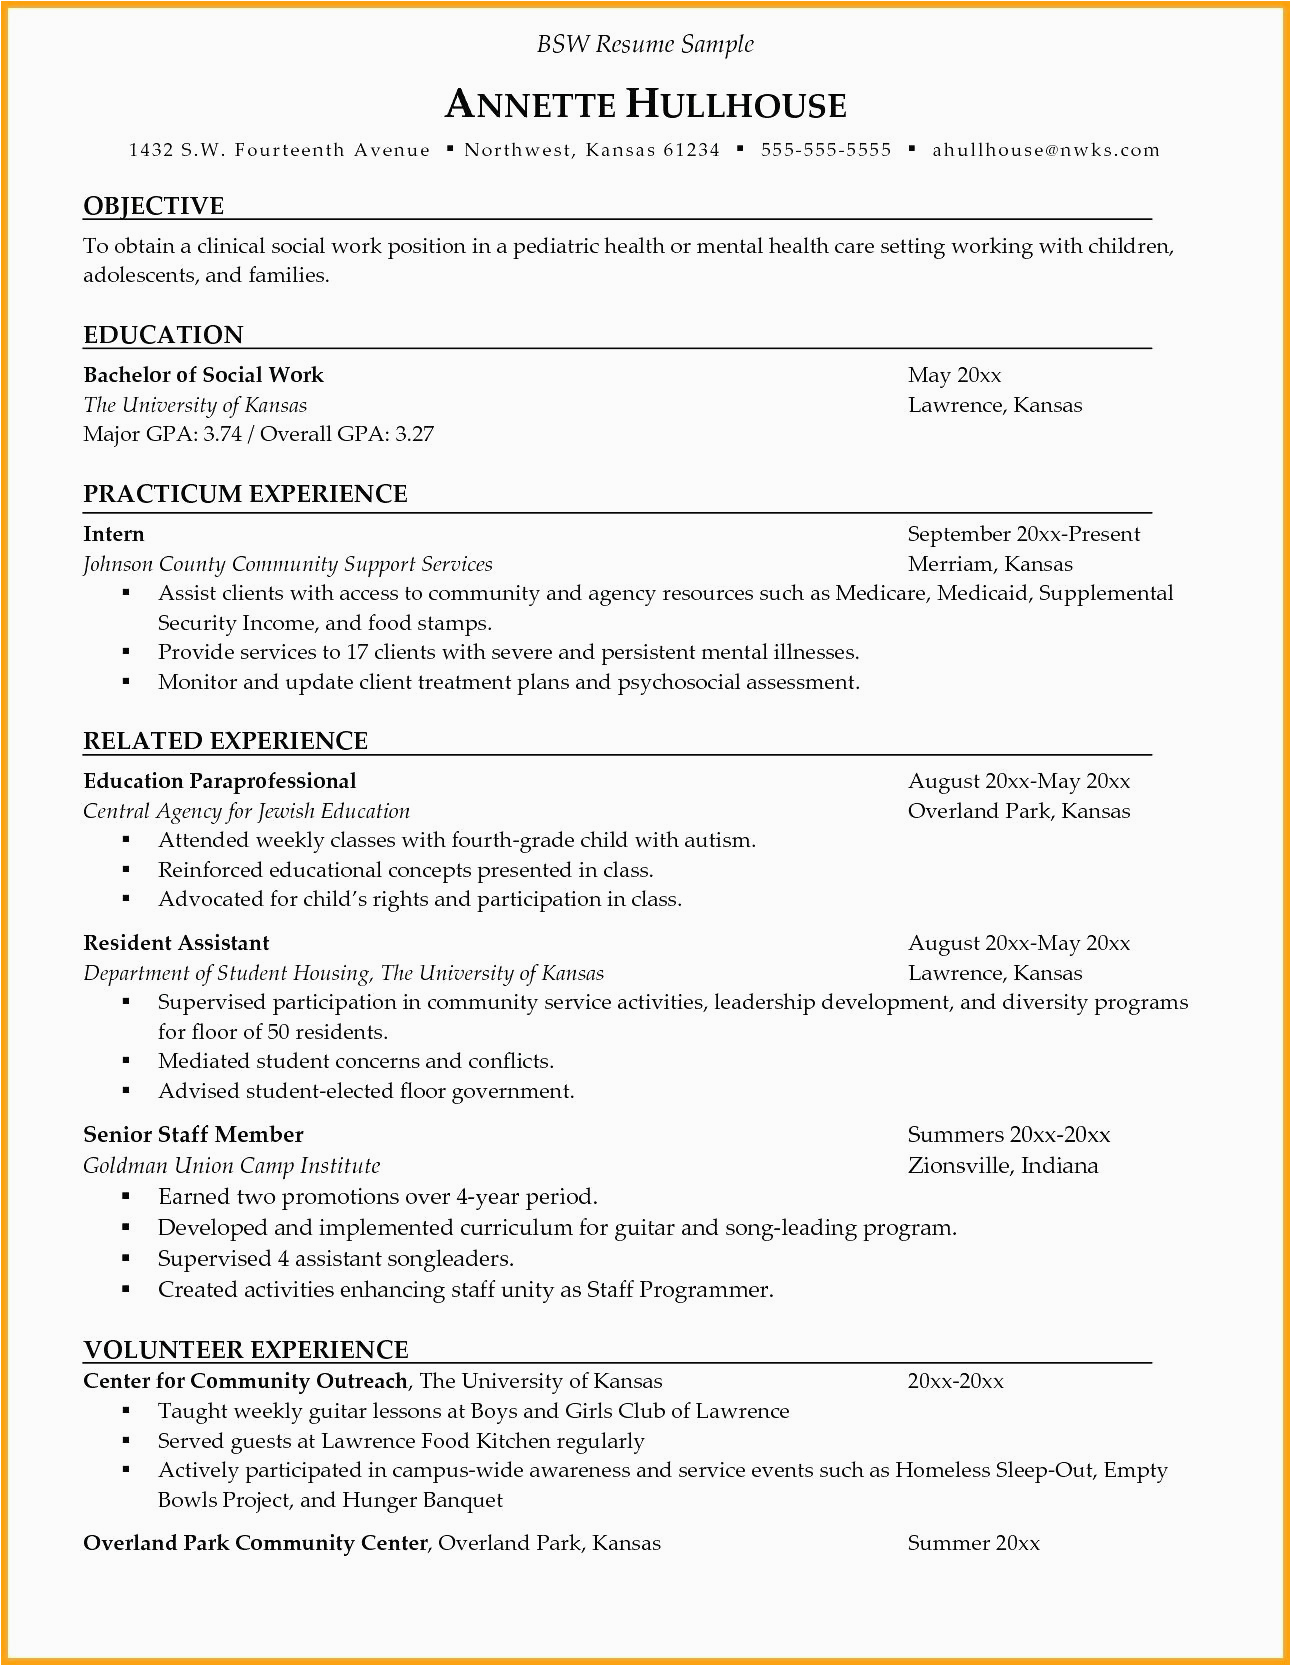 Sample Resume for Jobs In Usa Usa Jobs Resume Builder Example Best Resume Ideas